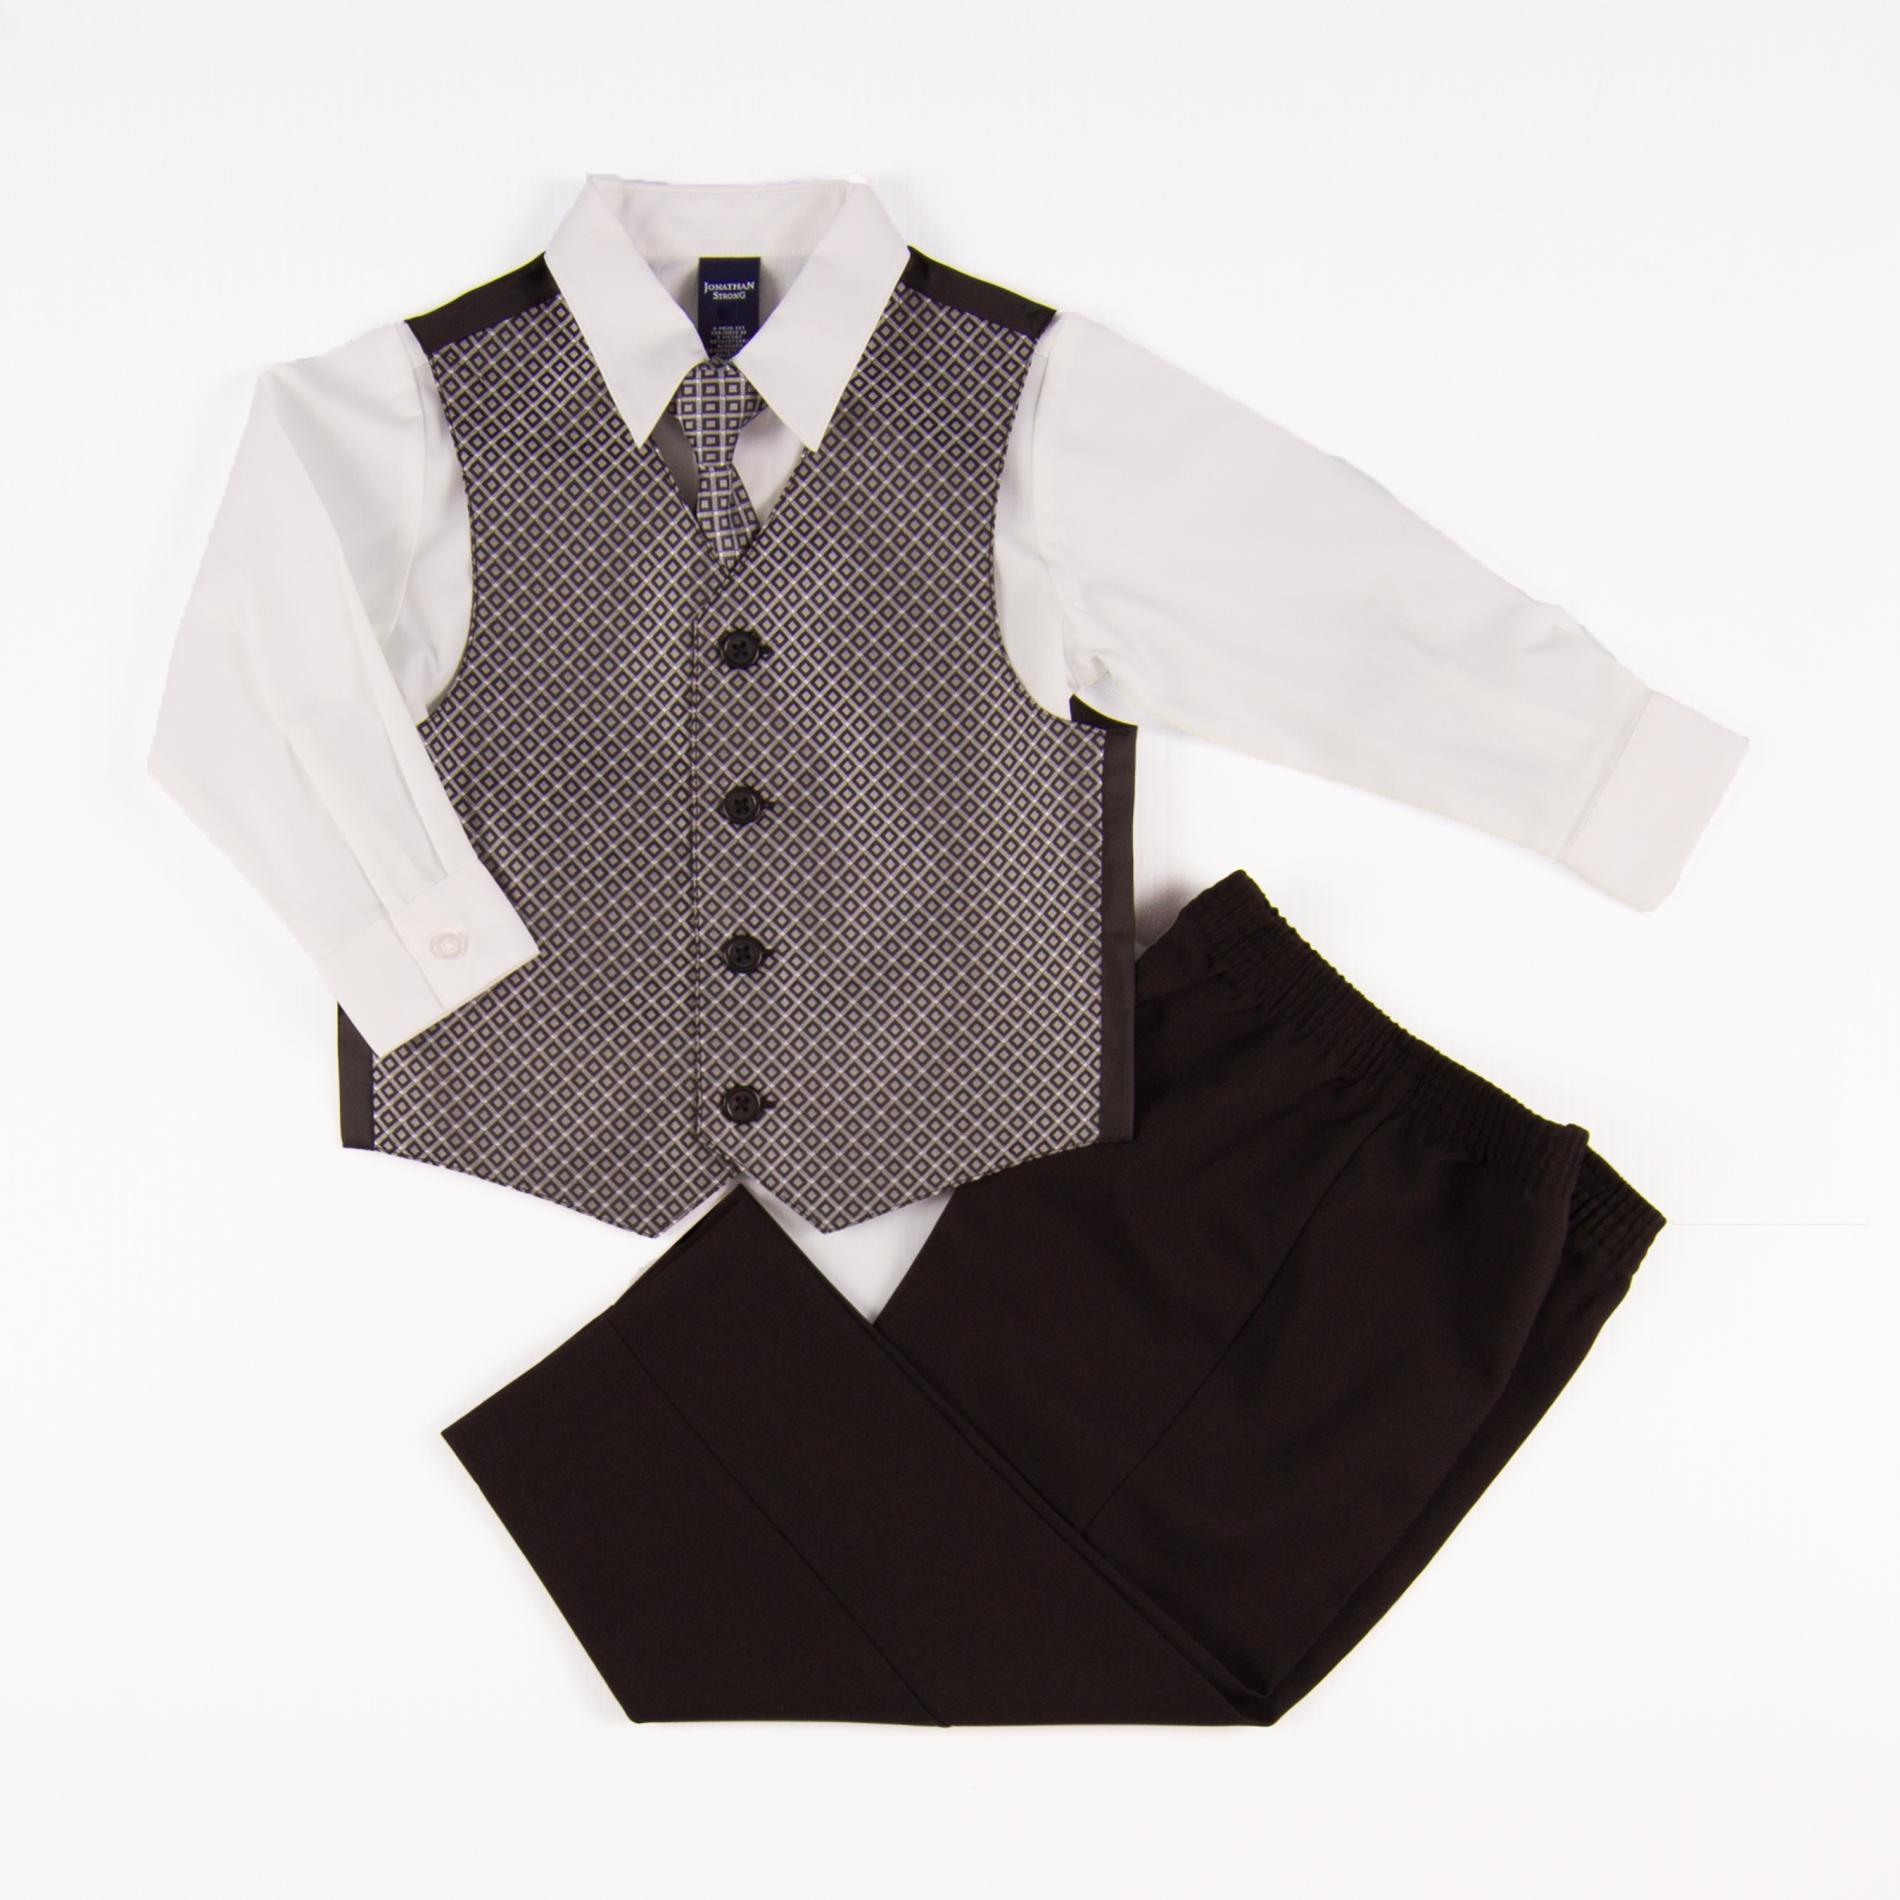 Jonathan Strong Infant & Toddler Boy's Shirt  Vest  Tie & Pants - Diamond